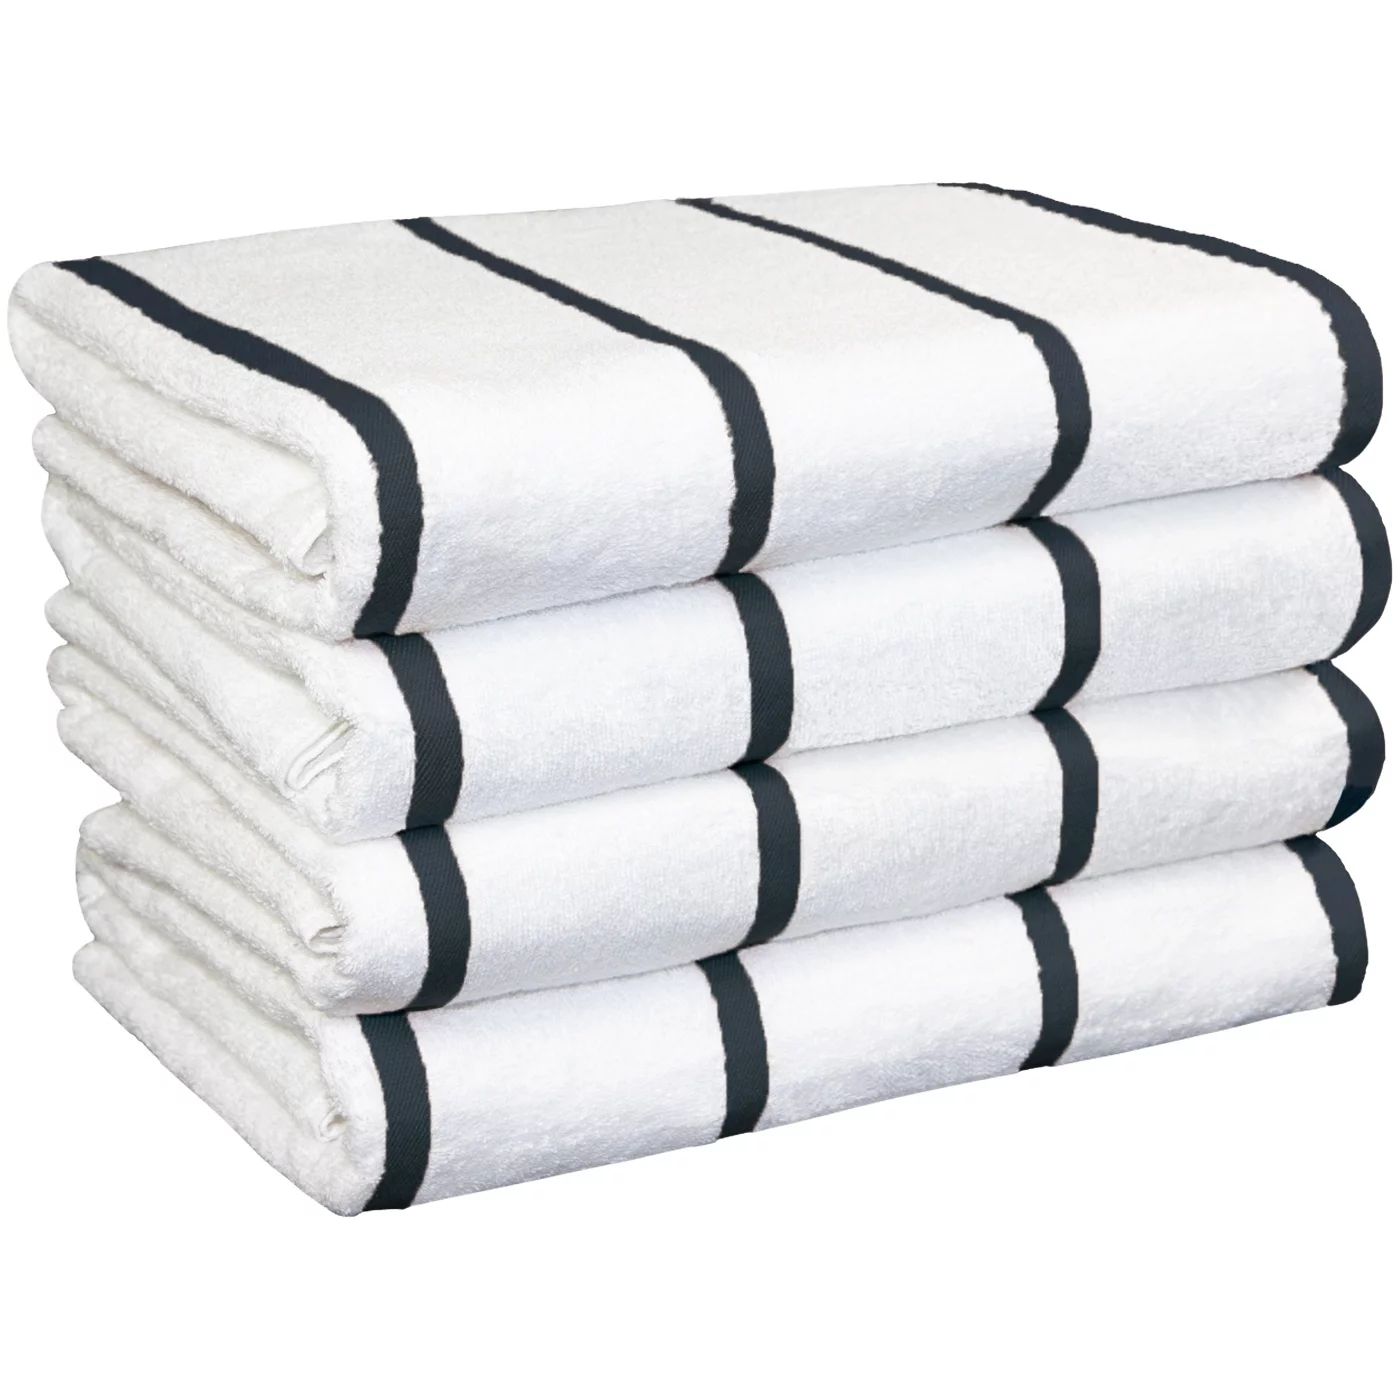 4 Pack of Las Rayas Striped Pool Towels - 30 x 60 - Dark Grey Horizontal Stripes - Soft Cotton | Walmart (US)